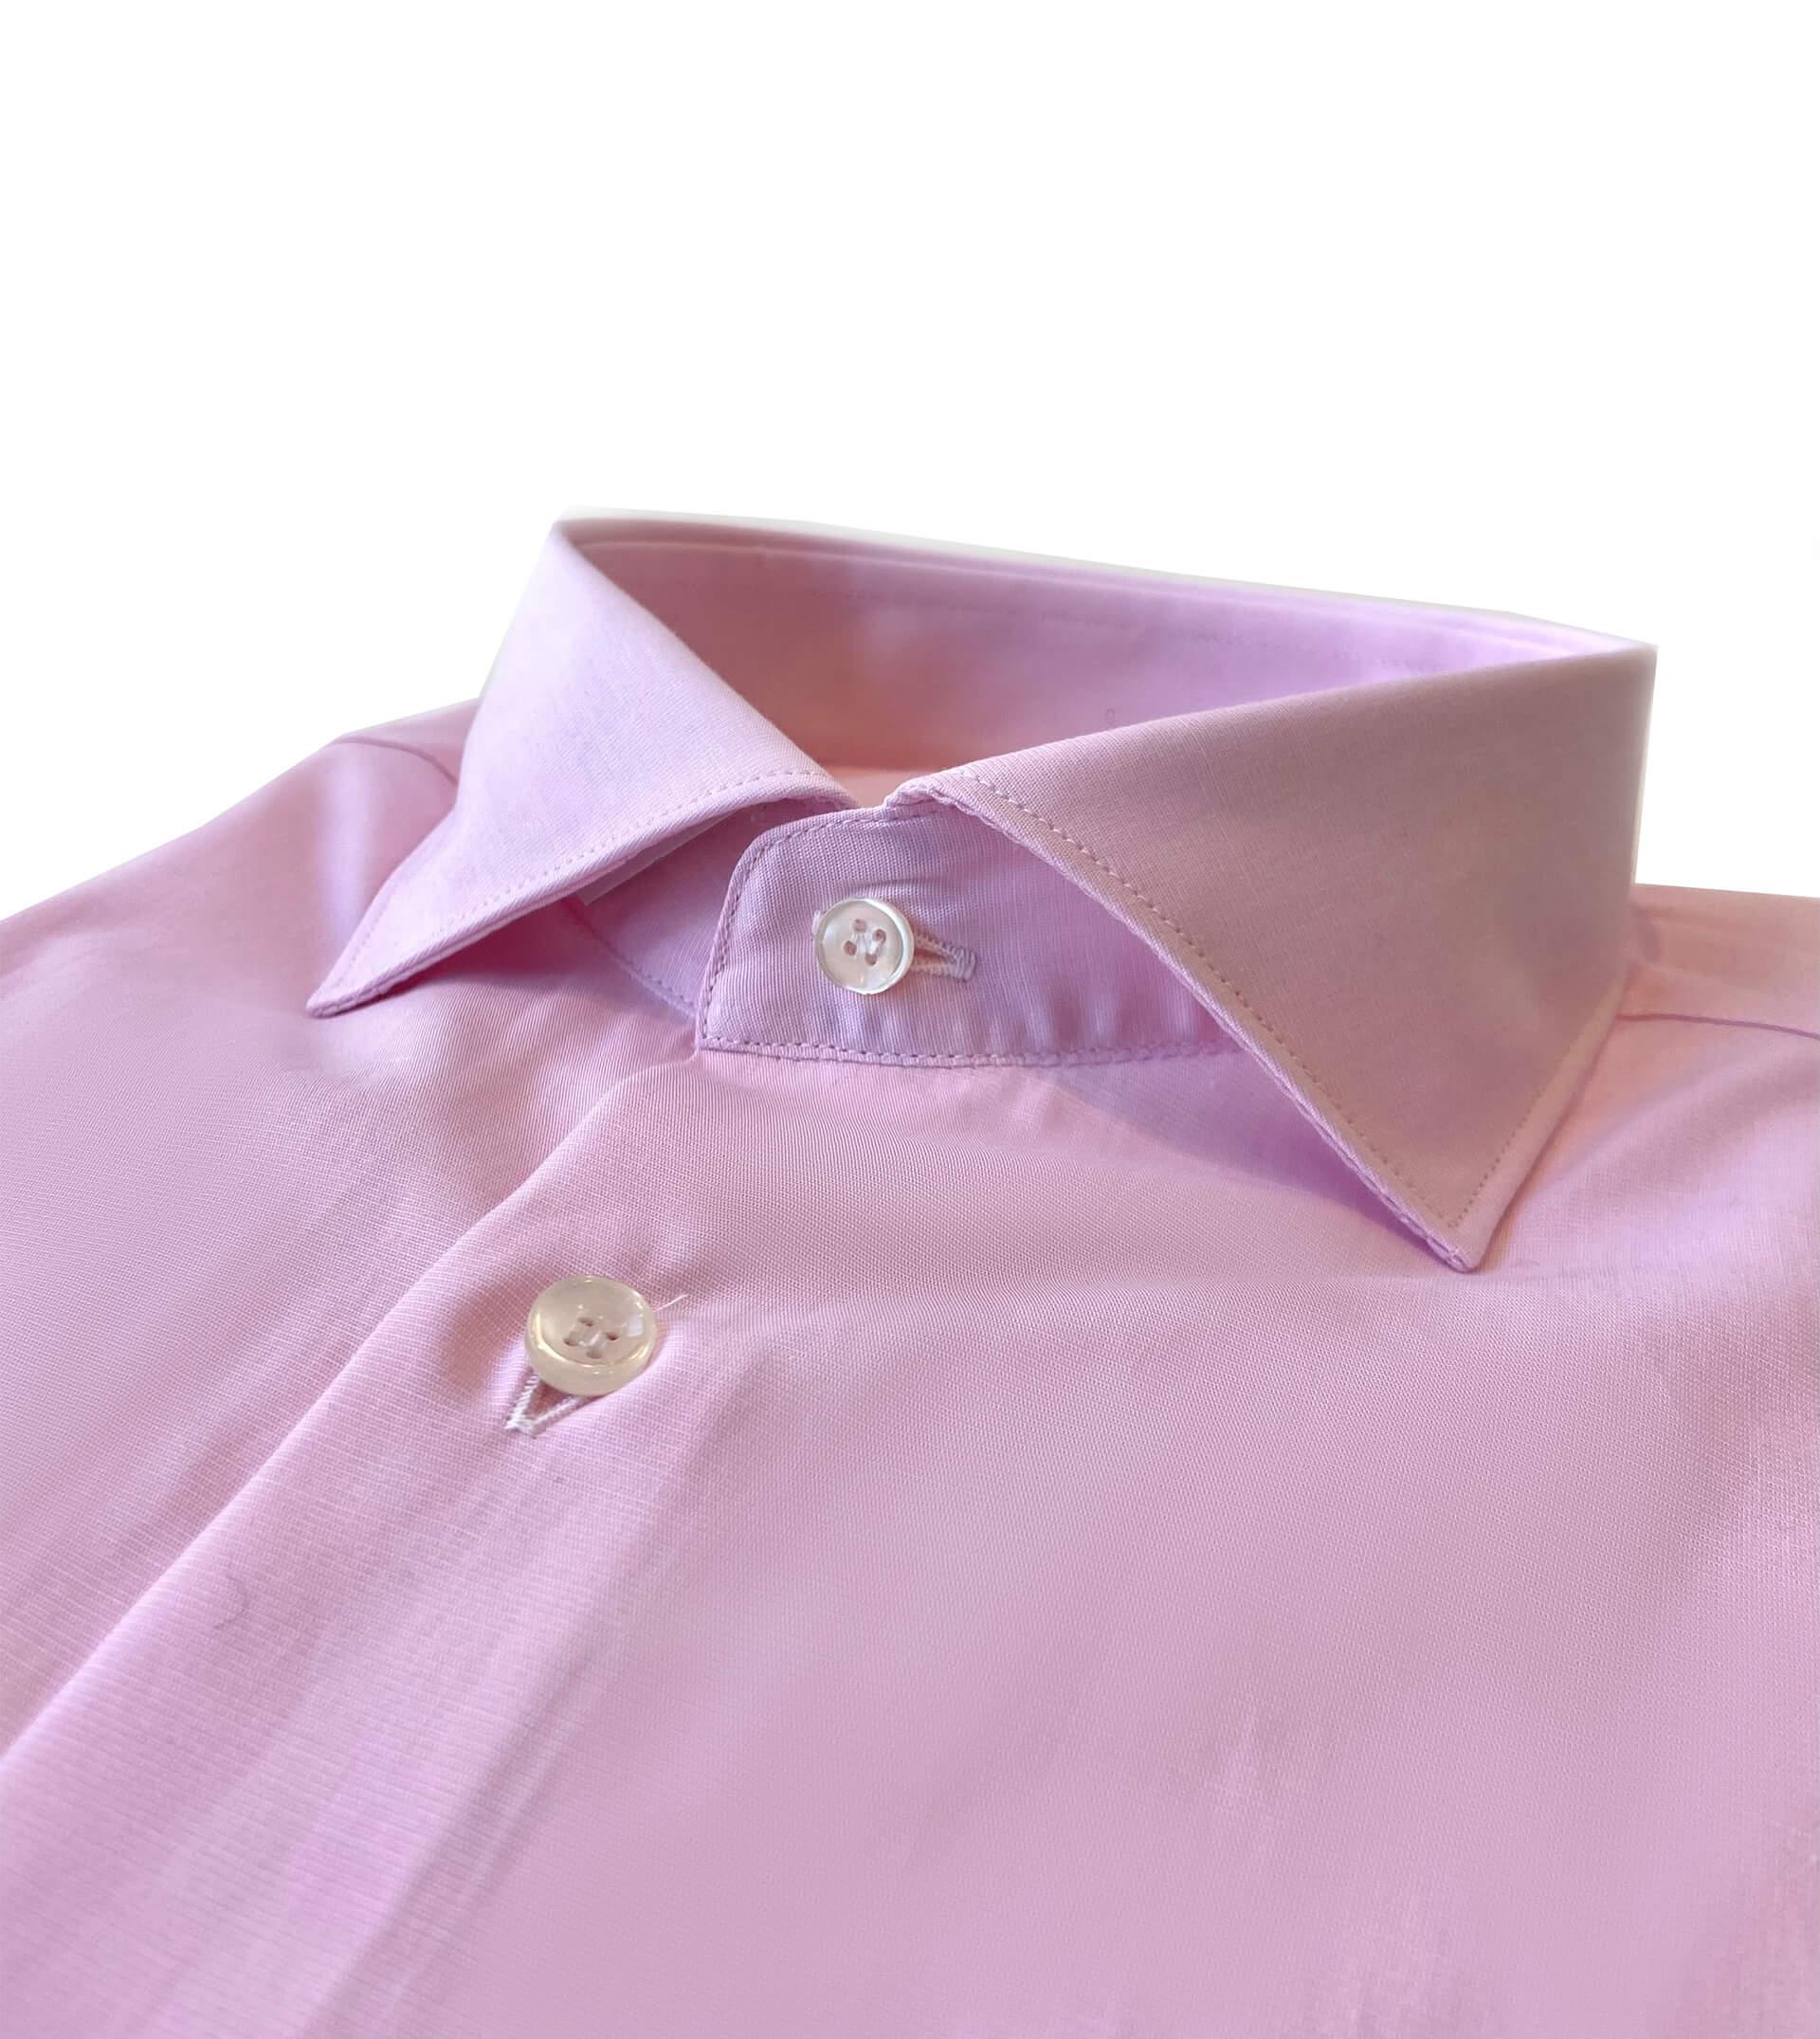 SAM MALOUF ORANGE LABEL Cotton Pink Solid Shirt